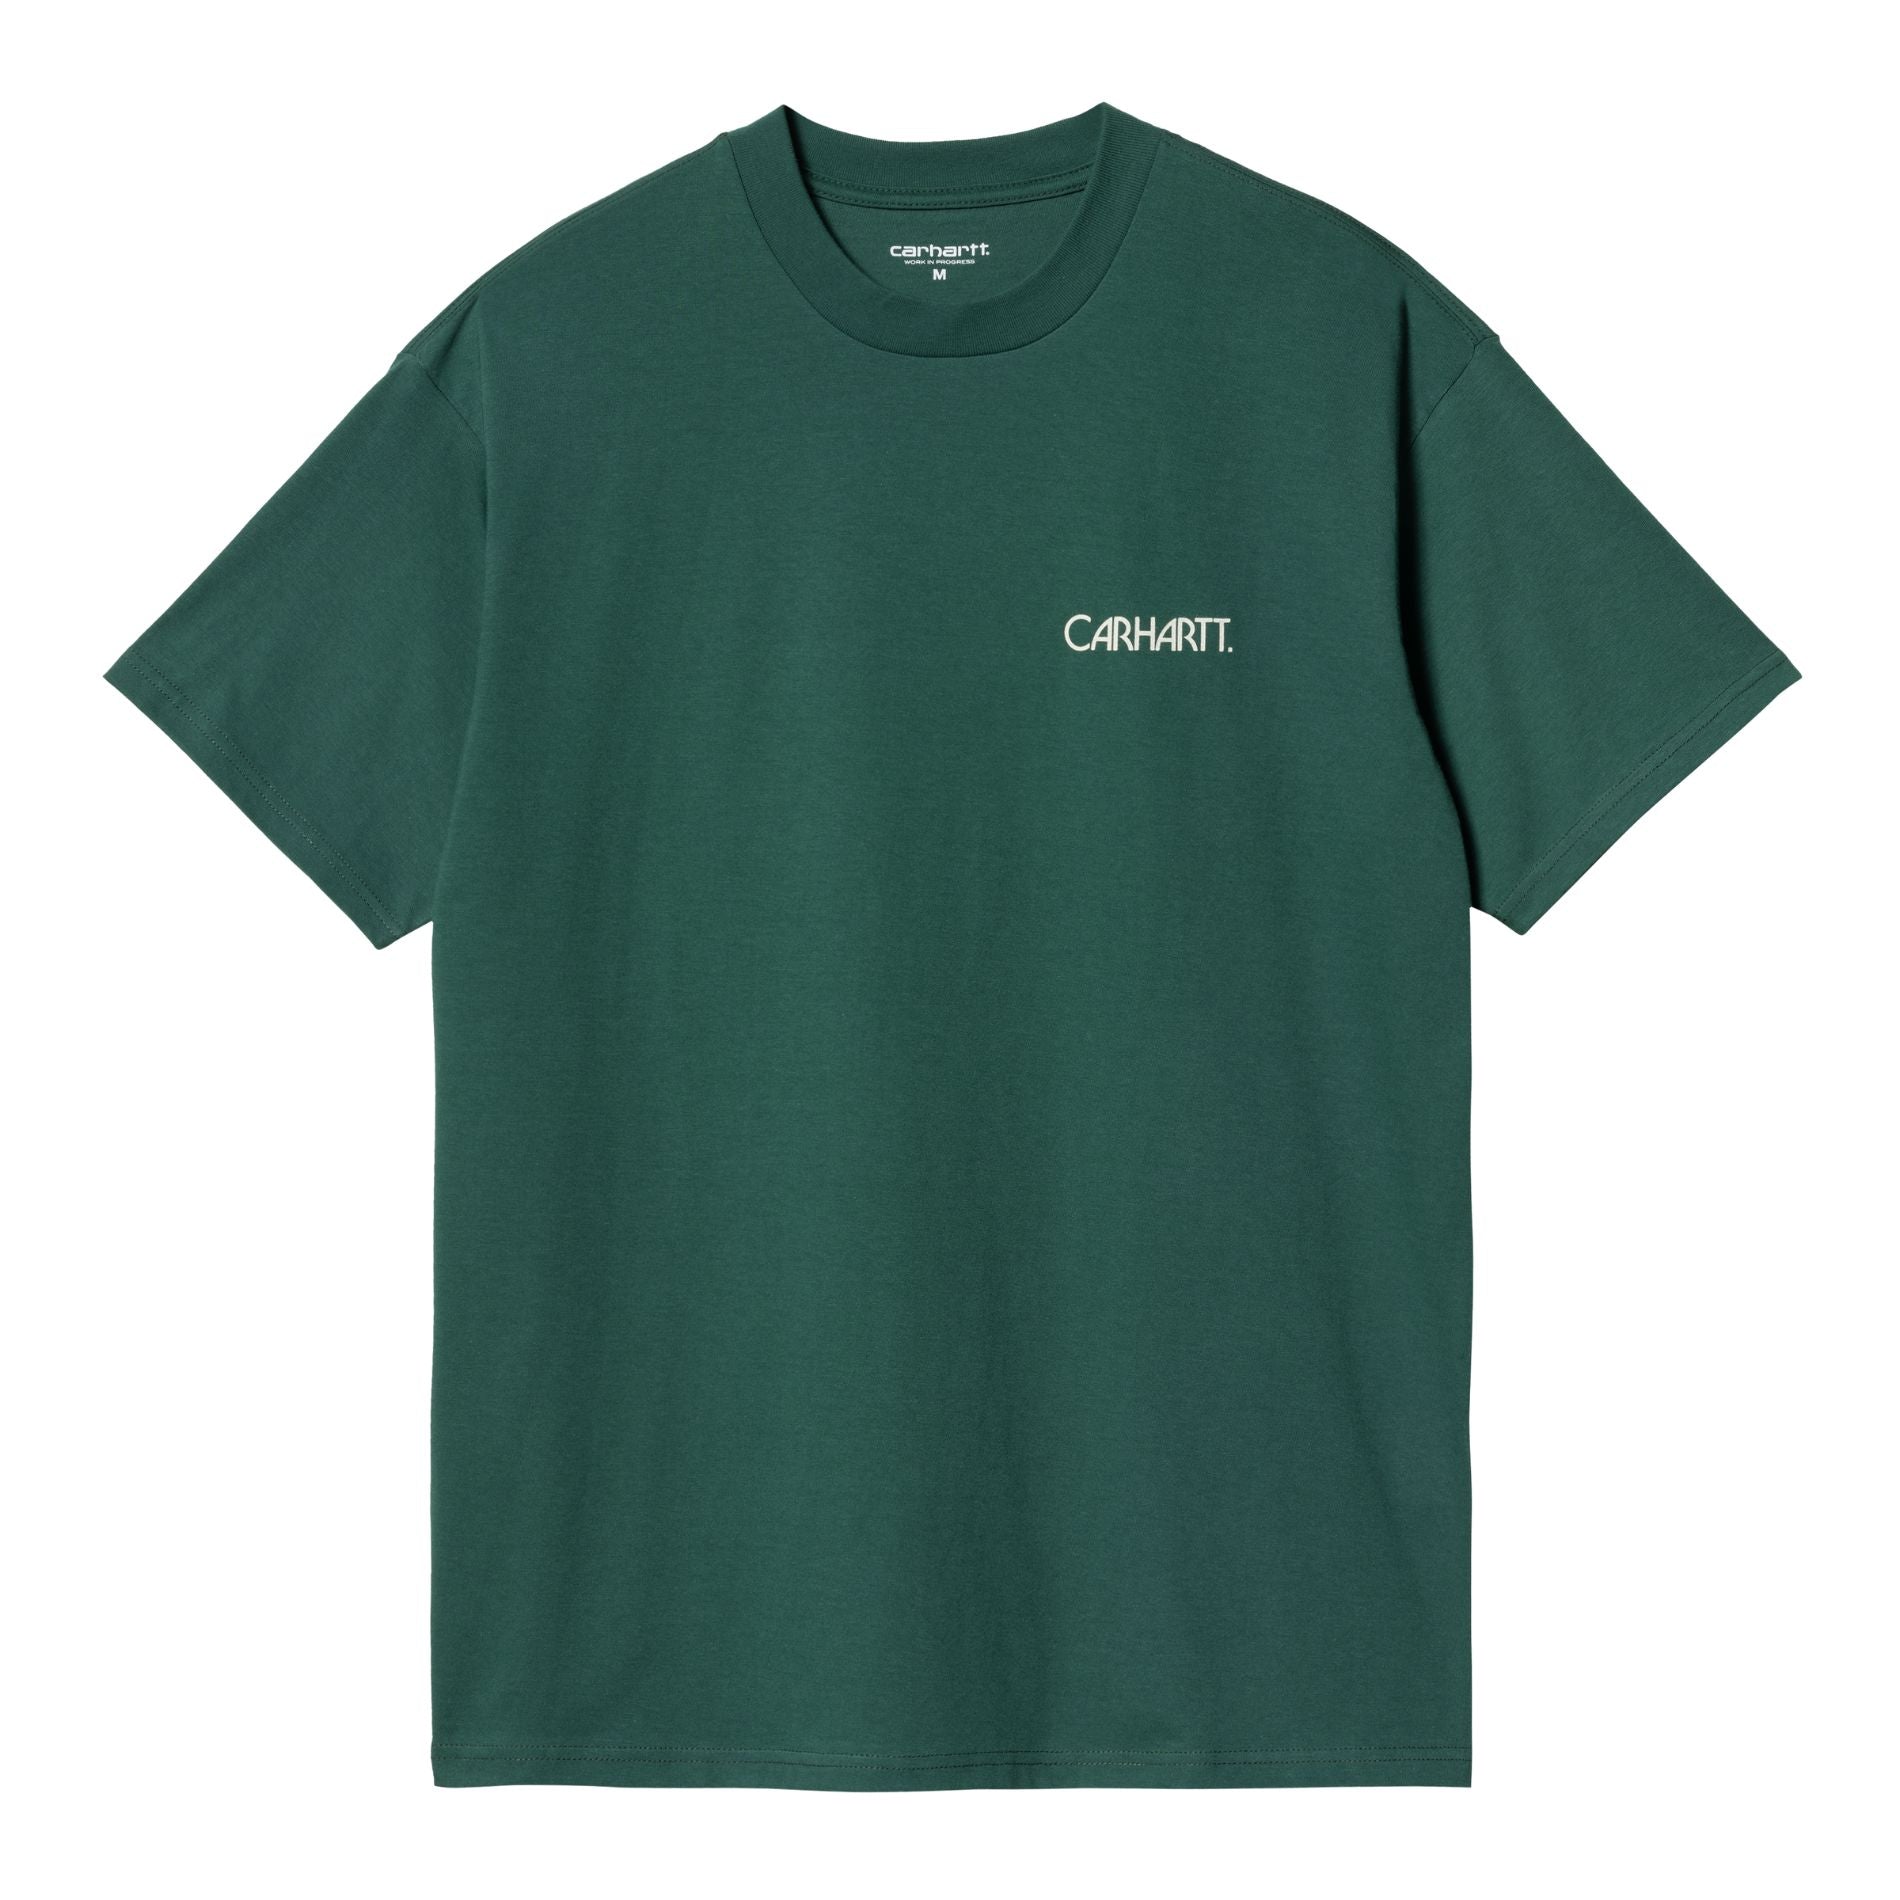 Carhartt WIP Soil T-Shirt Chevil. Foto da parte da frente.